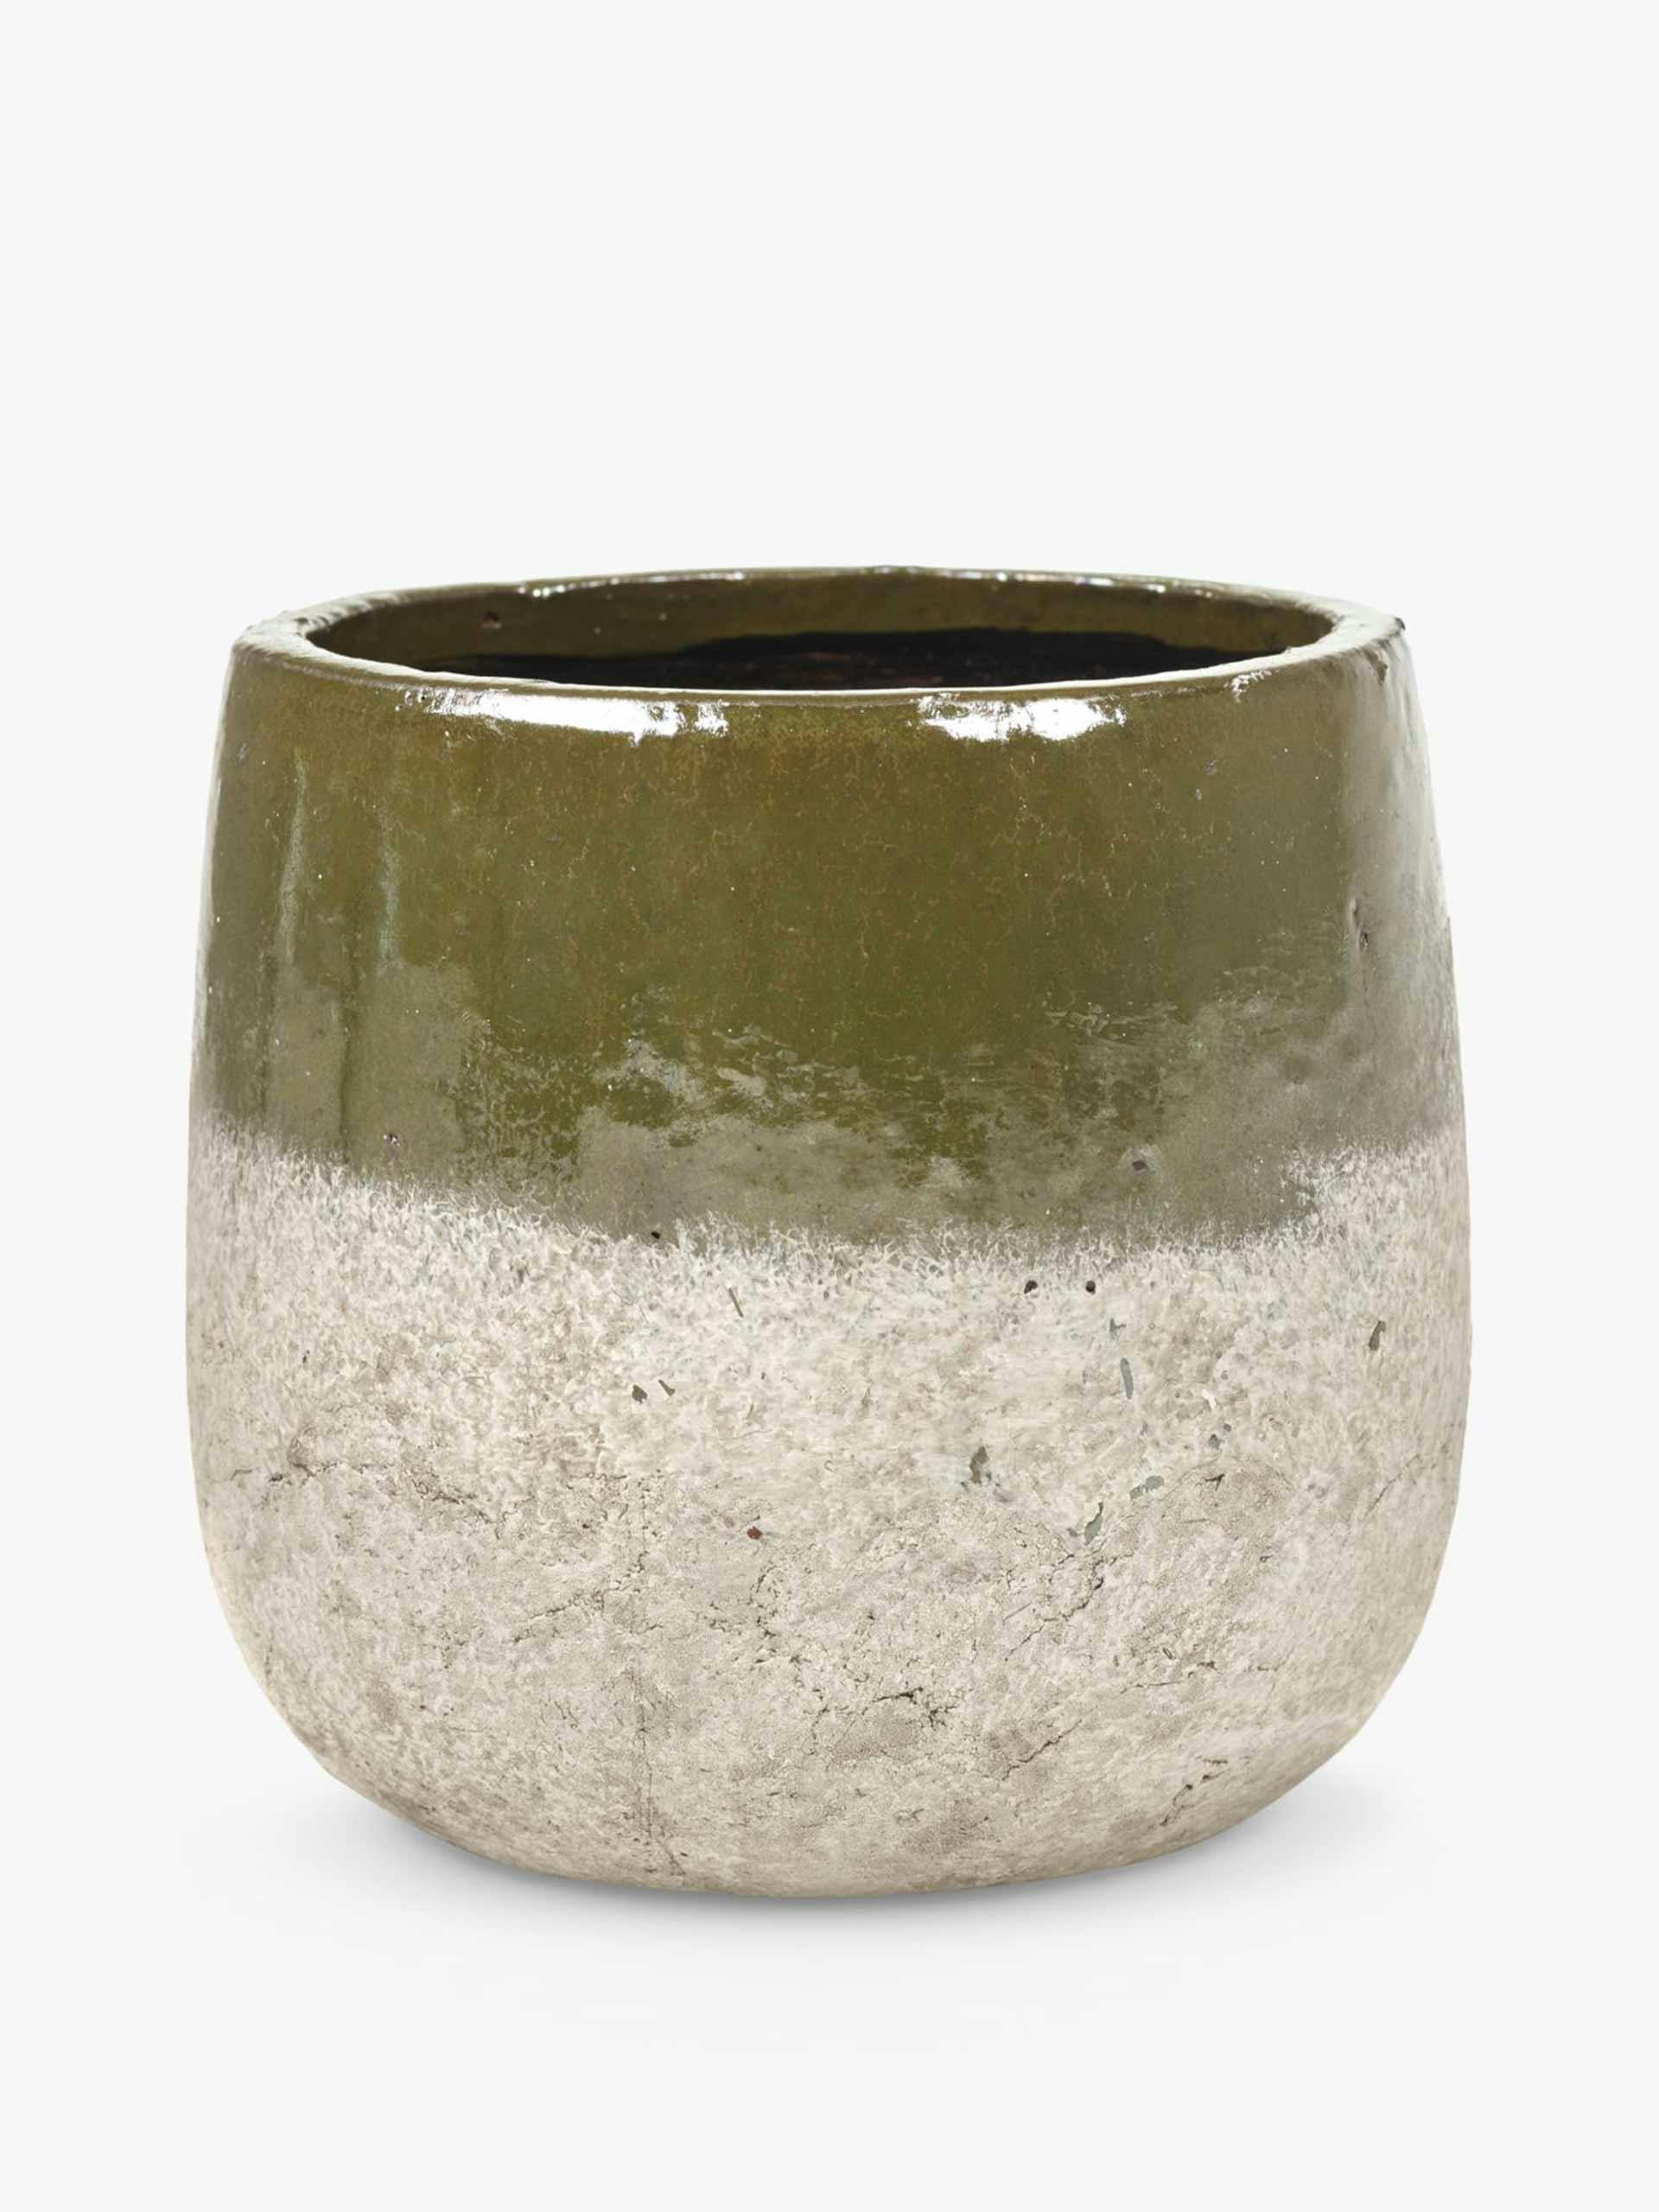 Glazed stoneware plant pot